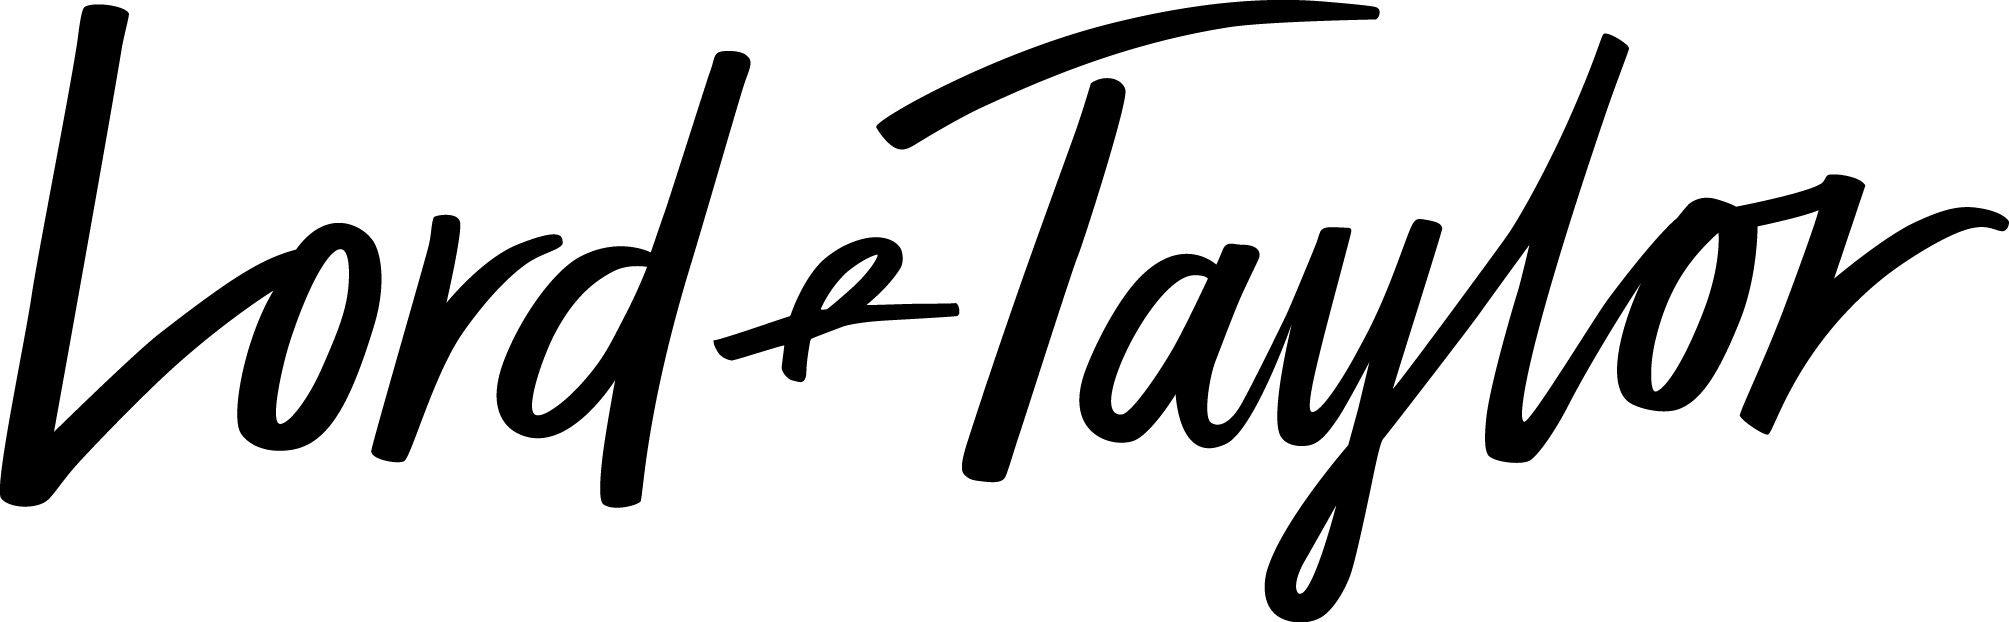 Lord & Taylor Logo - Lord & Taylor